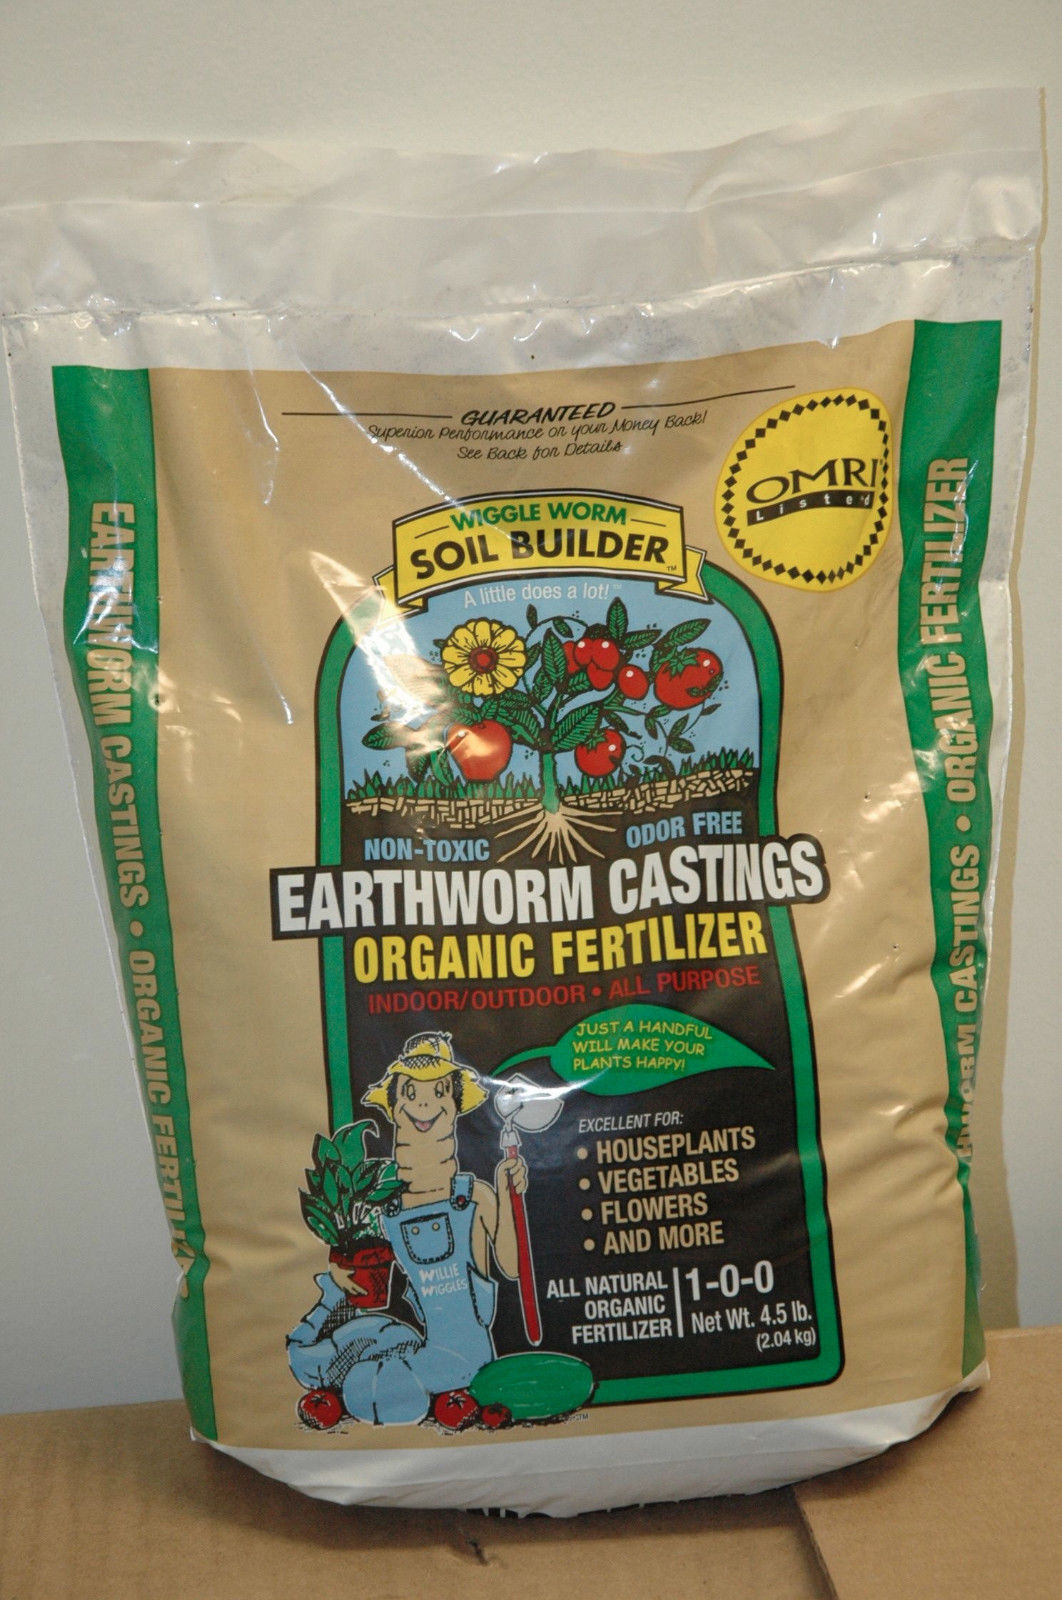 4.5 Lb. Wiggle Worm Soil Builder Earthworm Castings OMRI Listed Organic Fert. - $18.99